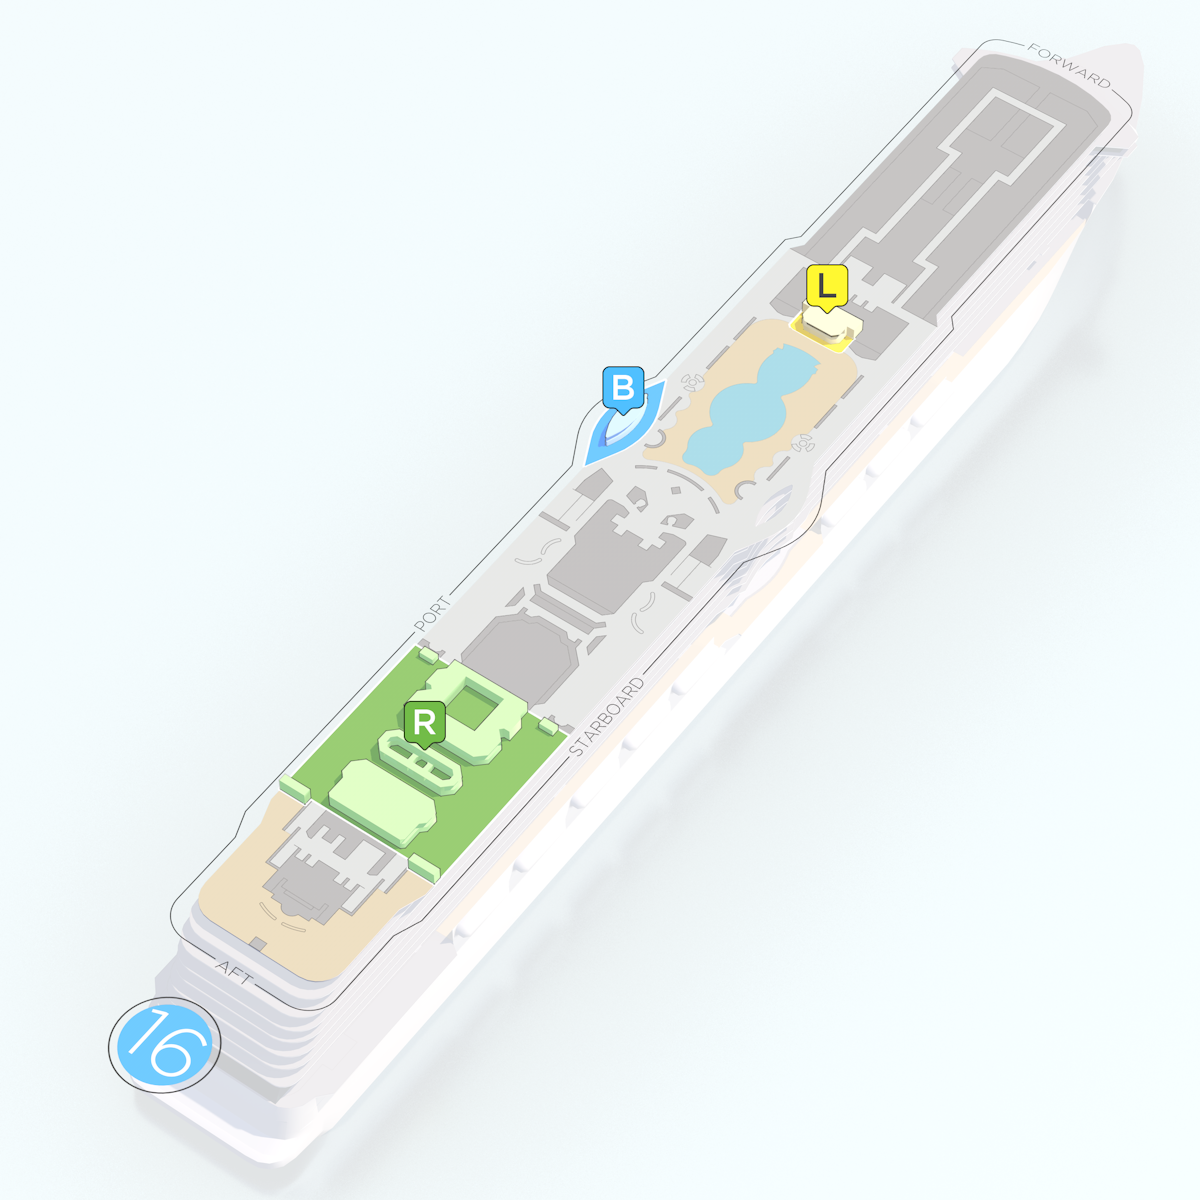 Ship Navigation - UI Mockup